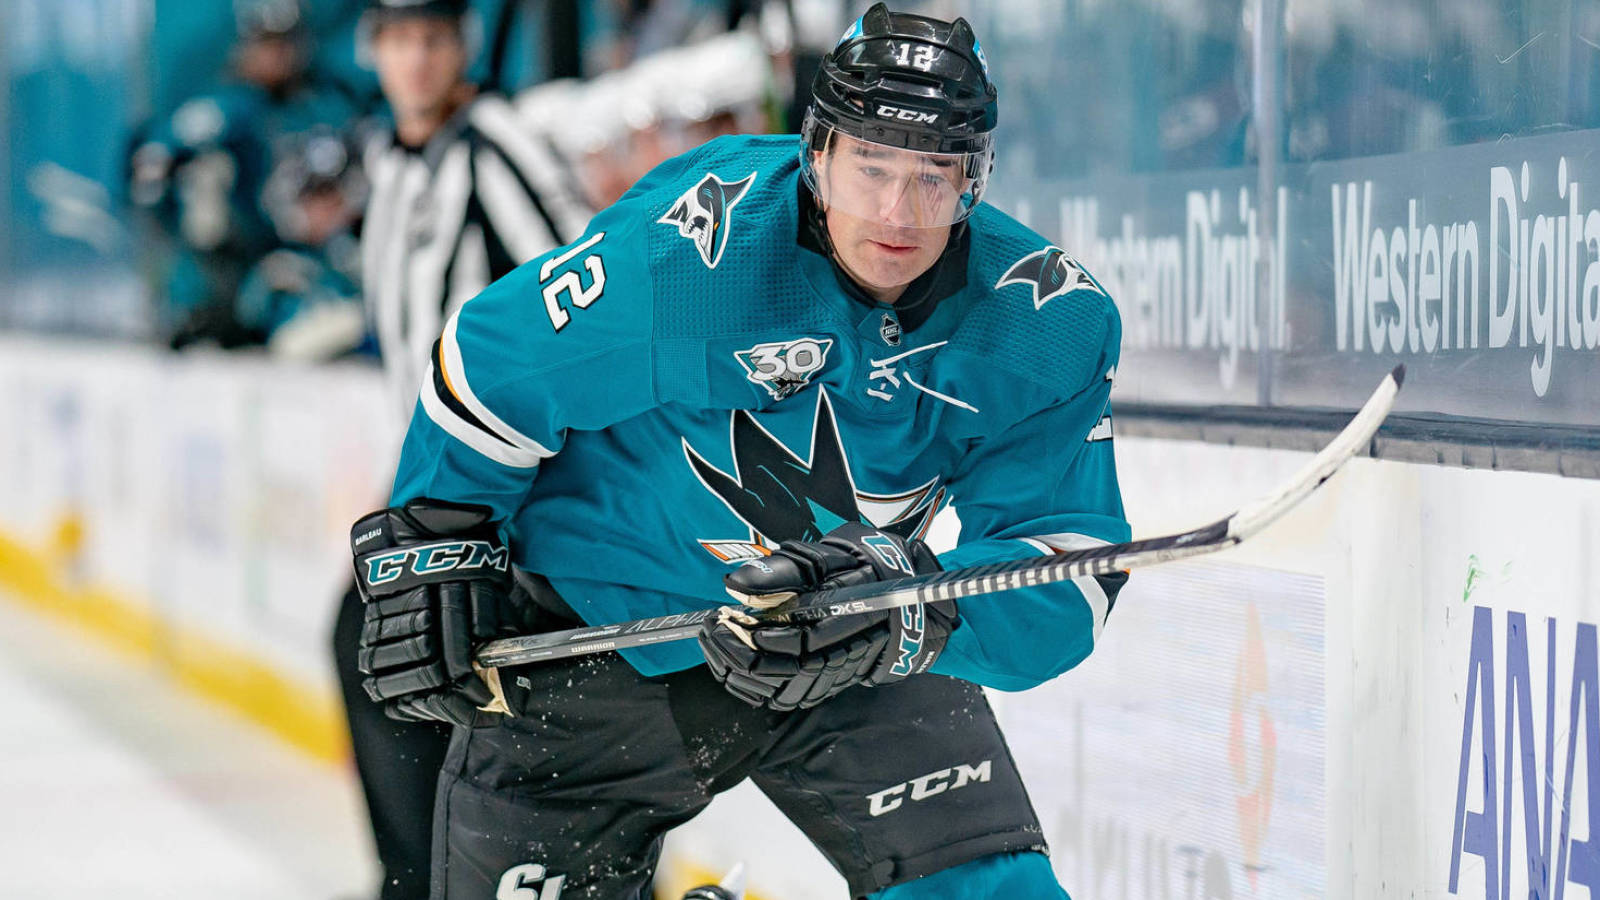 Trade: Sharks send Patrick Marleau to Penguins for draft pick - NBC Sports